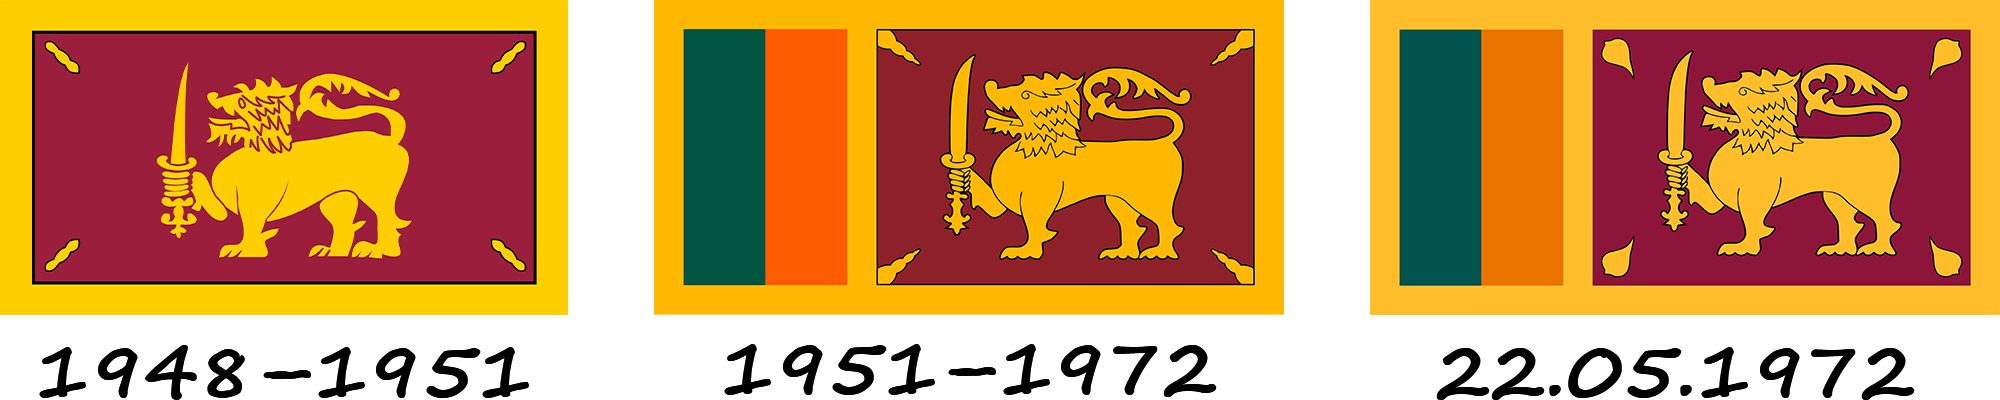 History of the flag of Sri Lanka